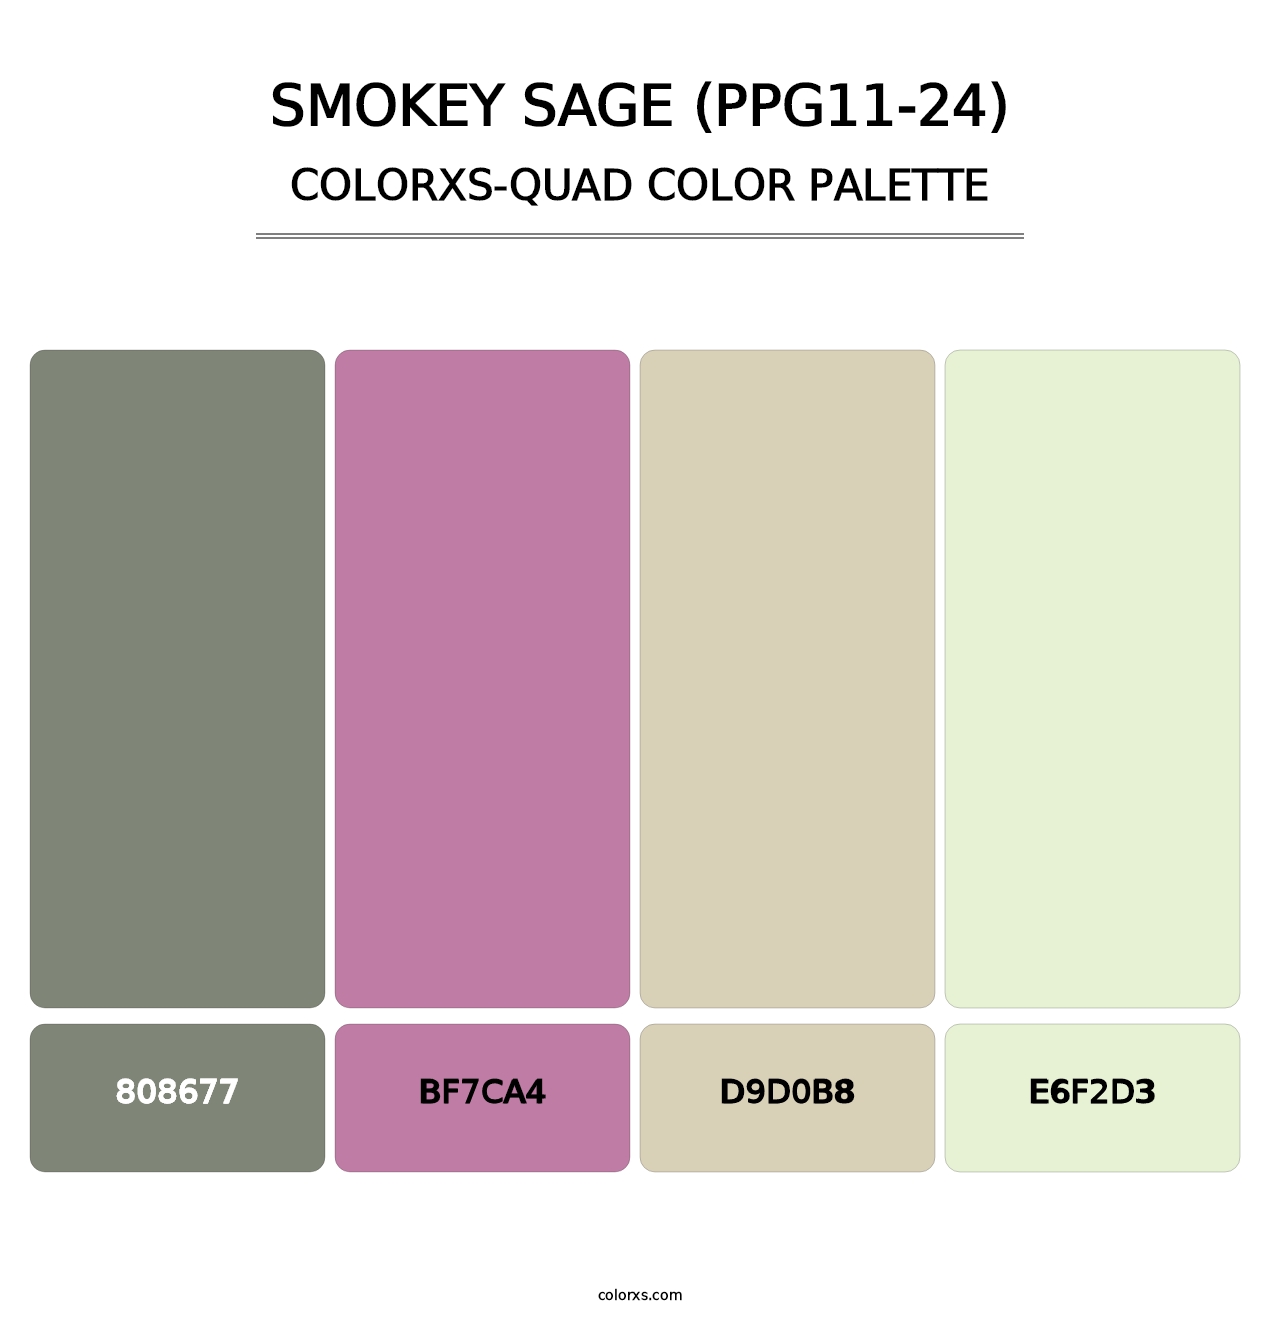 Smokey Sage (PPG11-24) - Colorxs Quad Palette